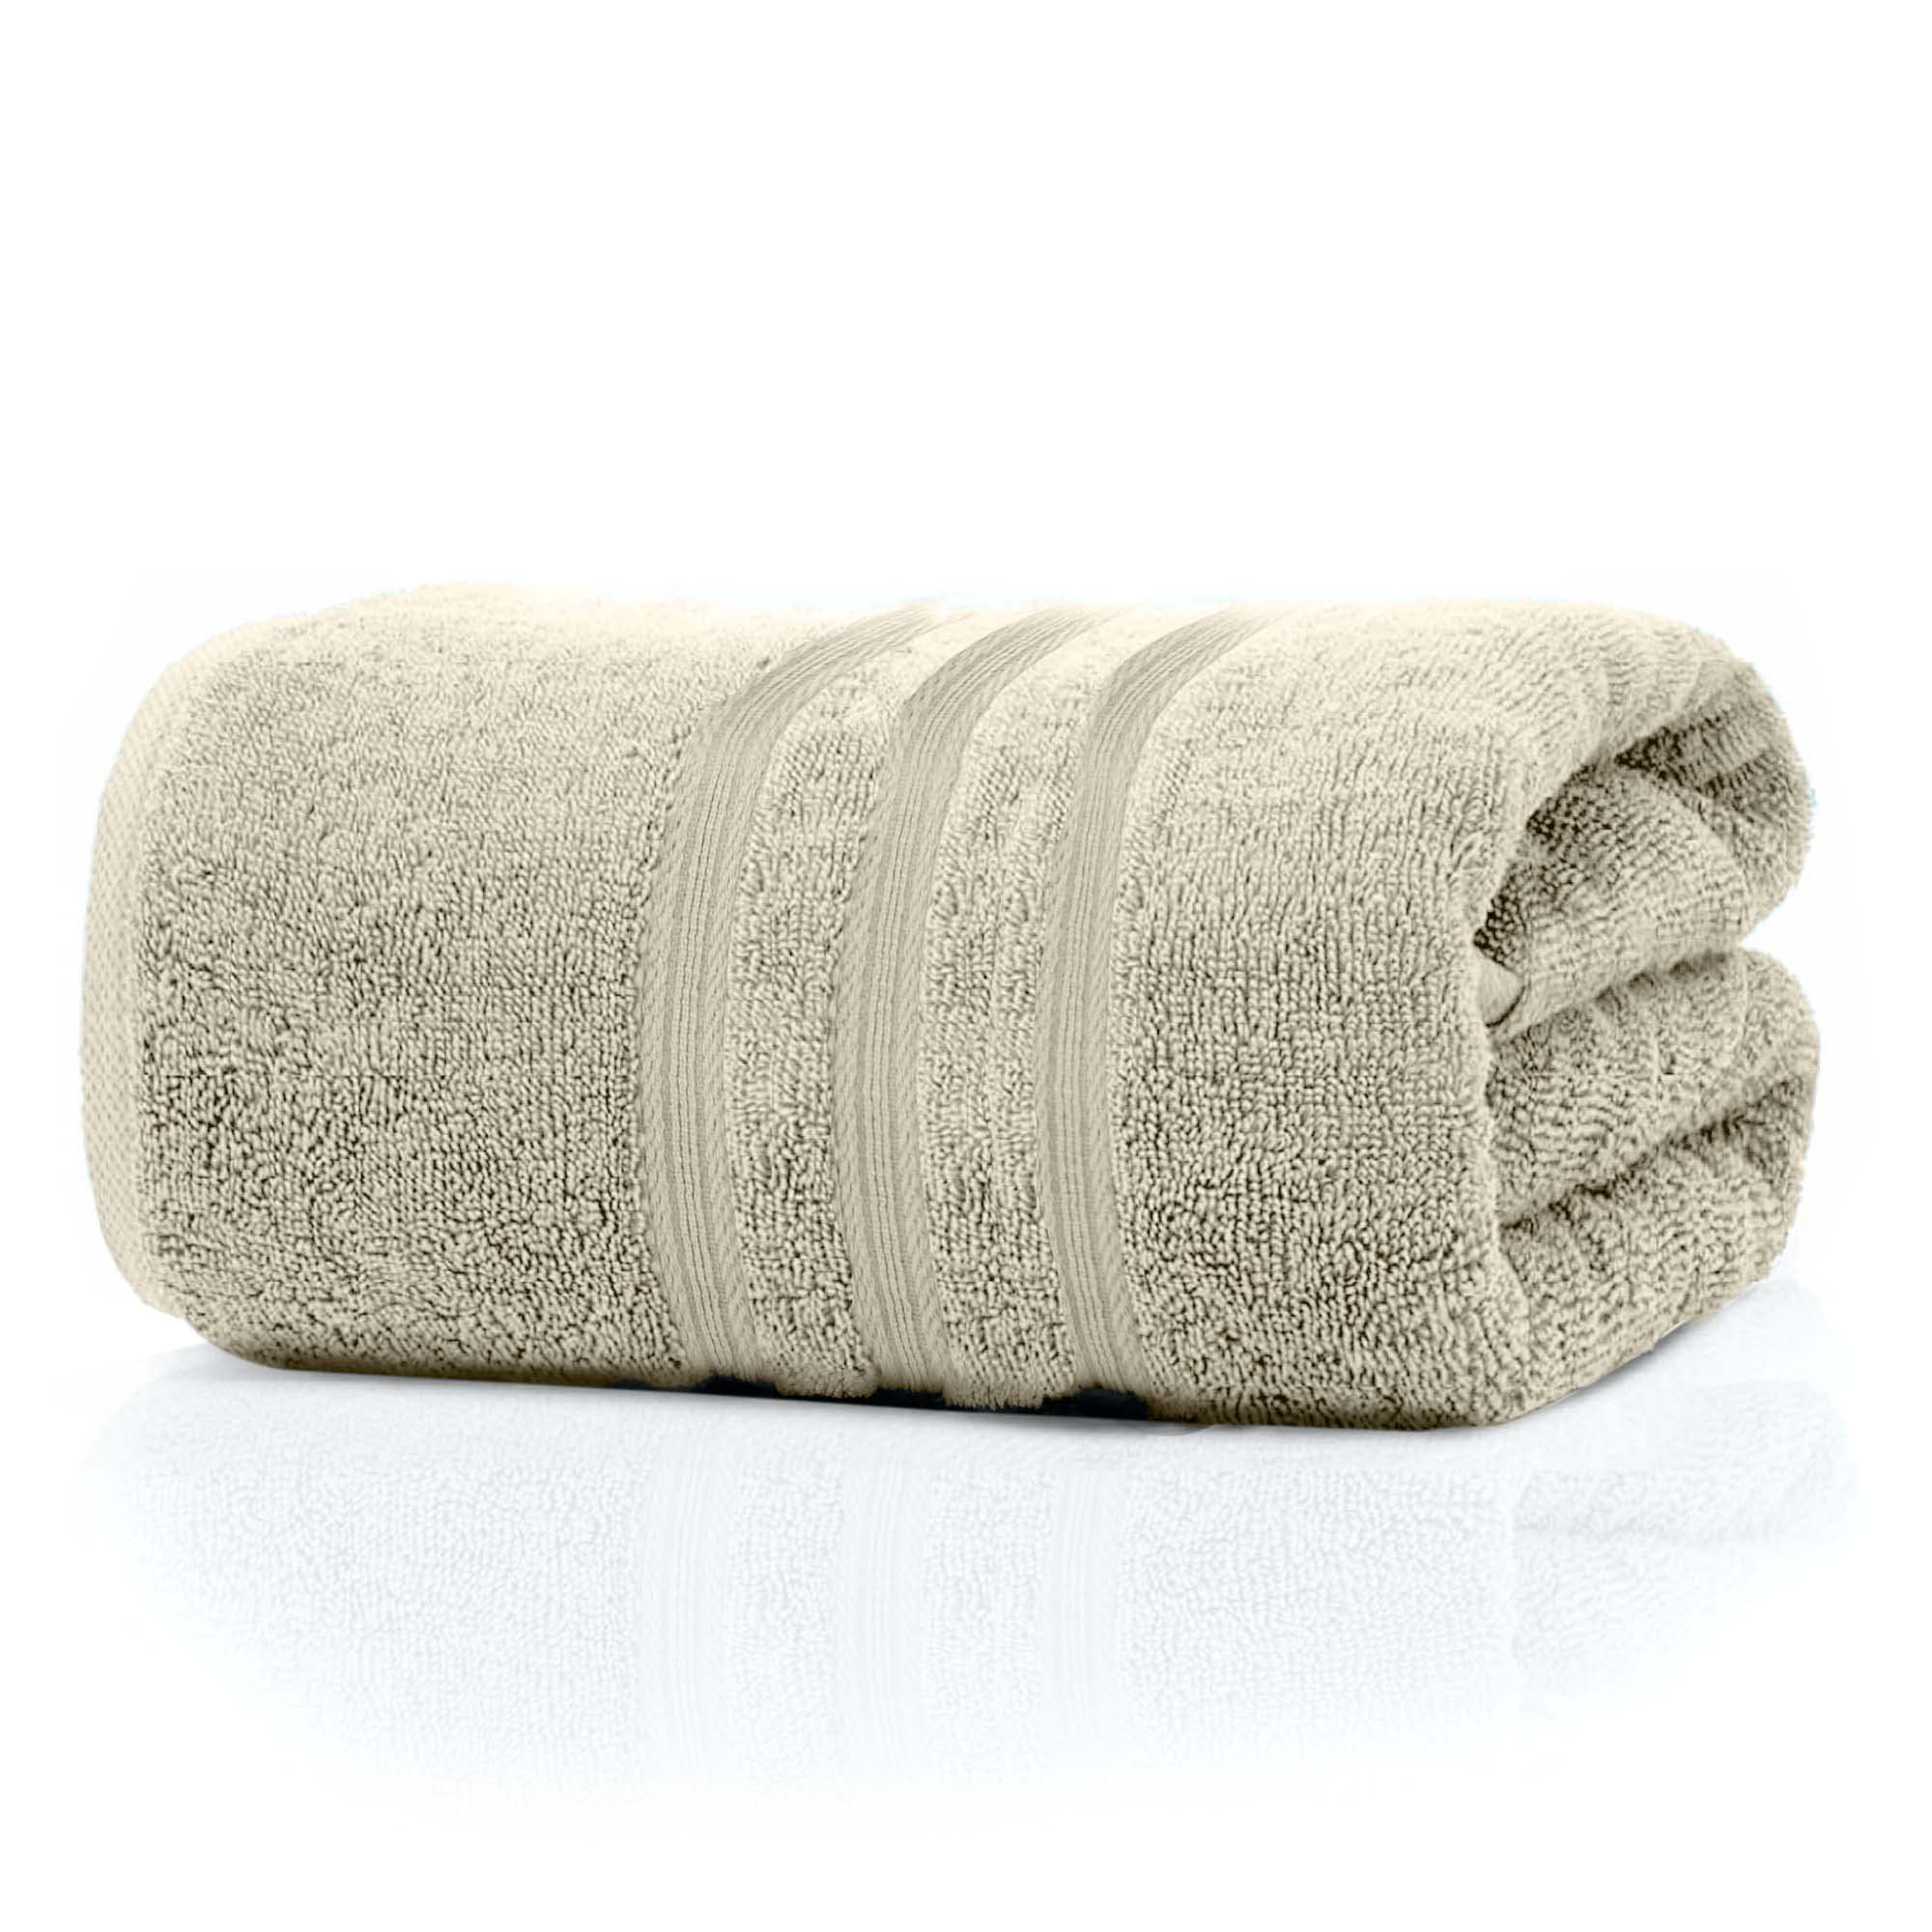 Pierre Donna Bath Towel, Highly Absorbent (Beige)